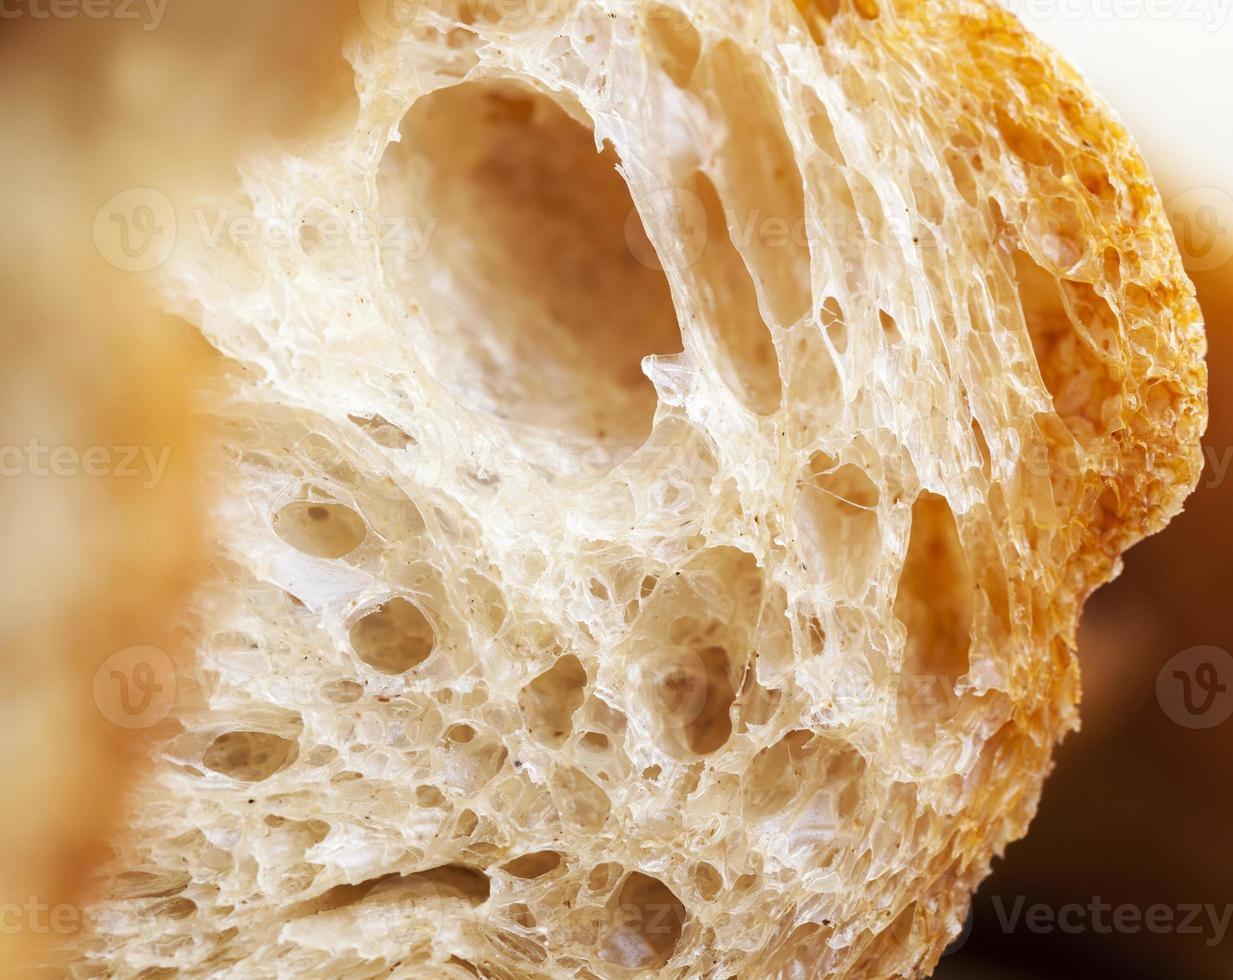 bread pulp, close up photo